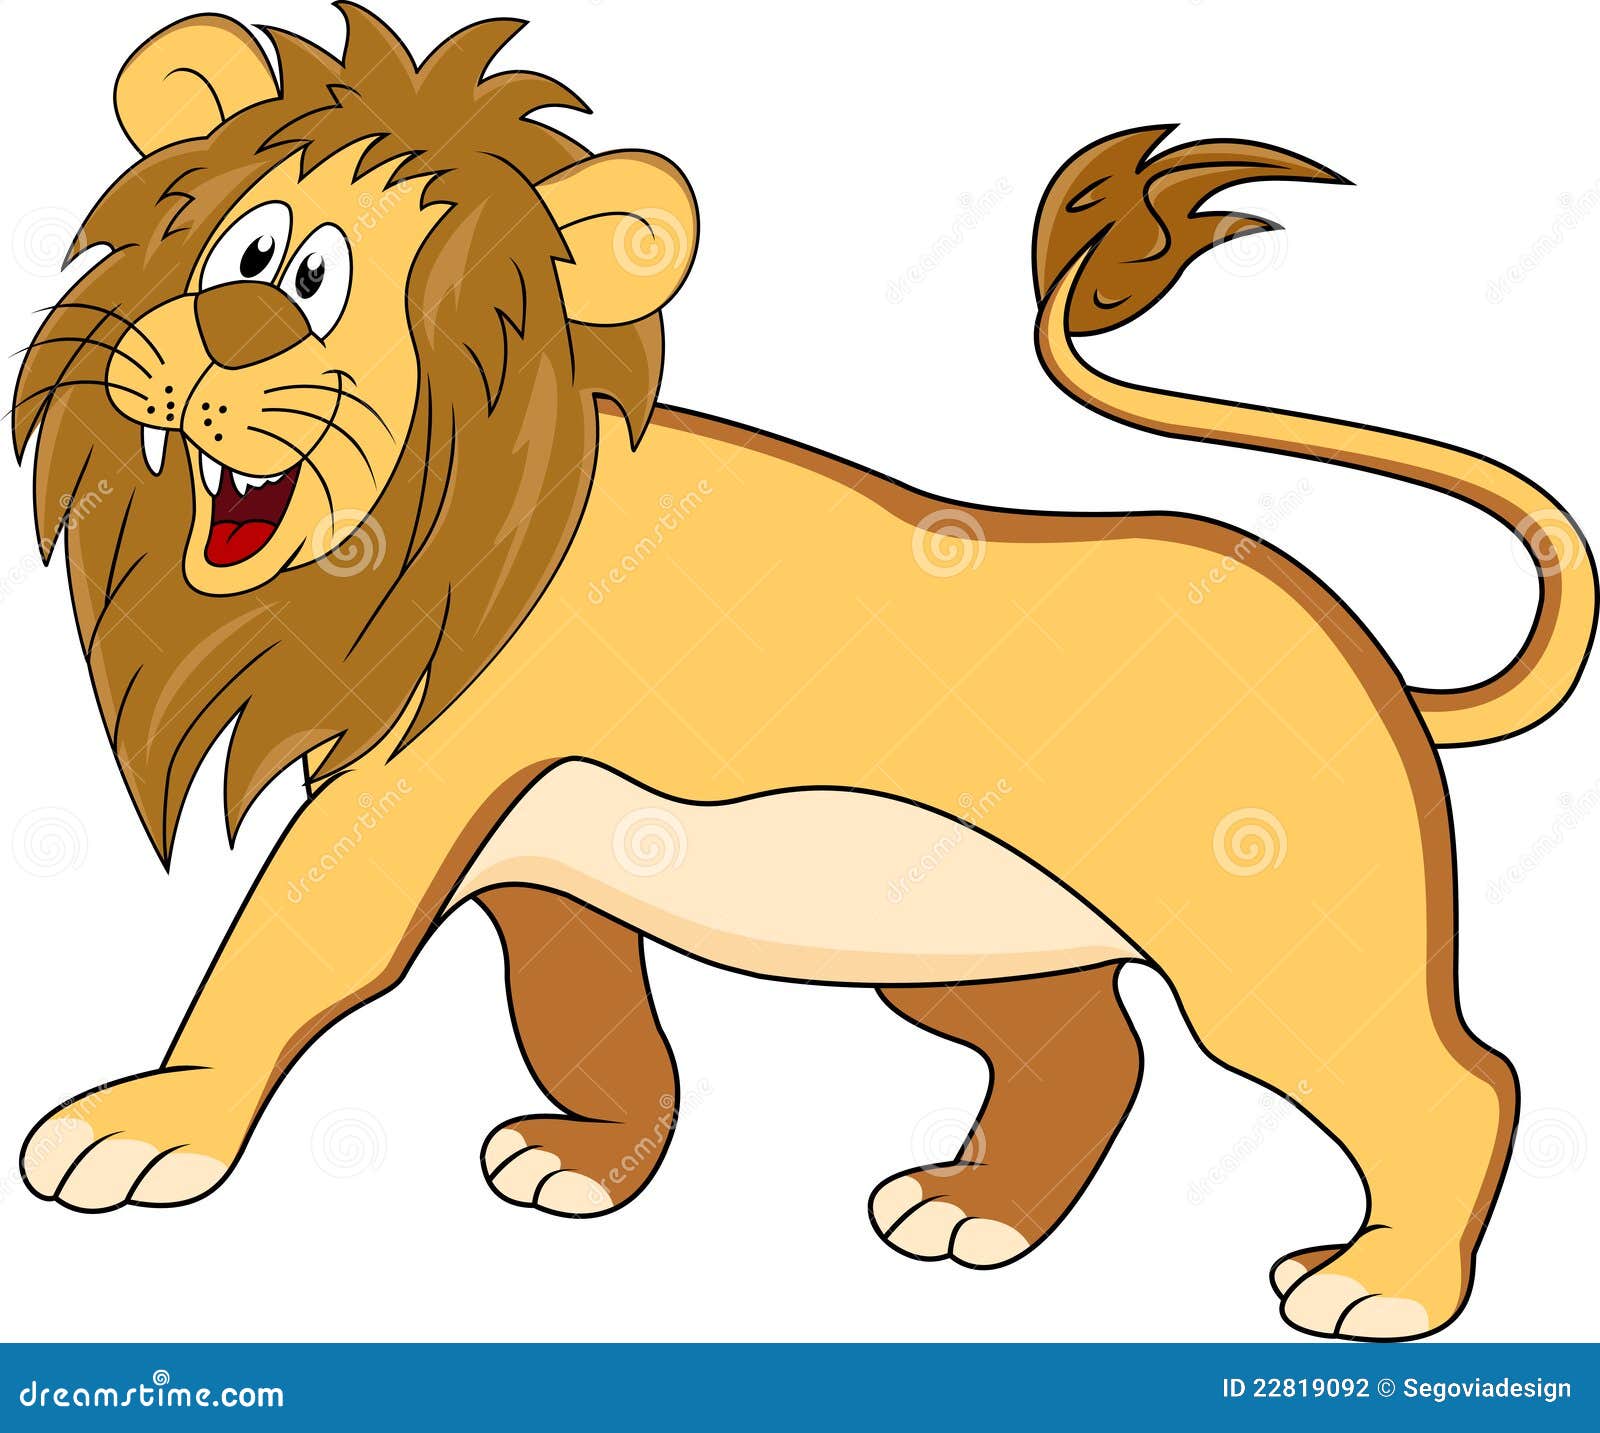 Funny lion cartoon stock vector. Illustration of mascot - 22819092